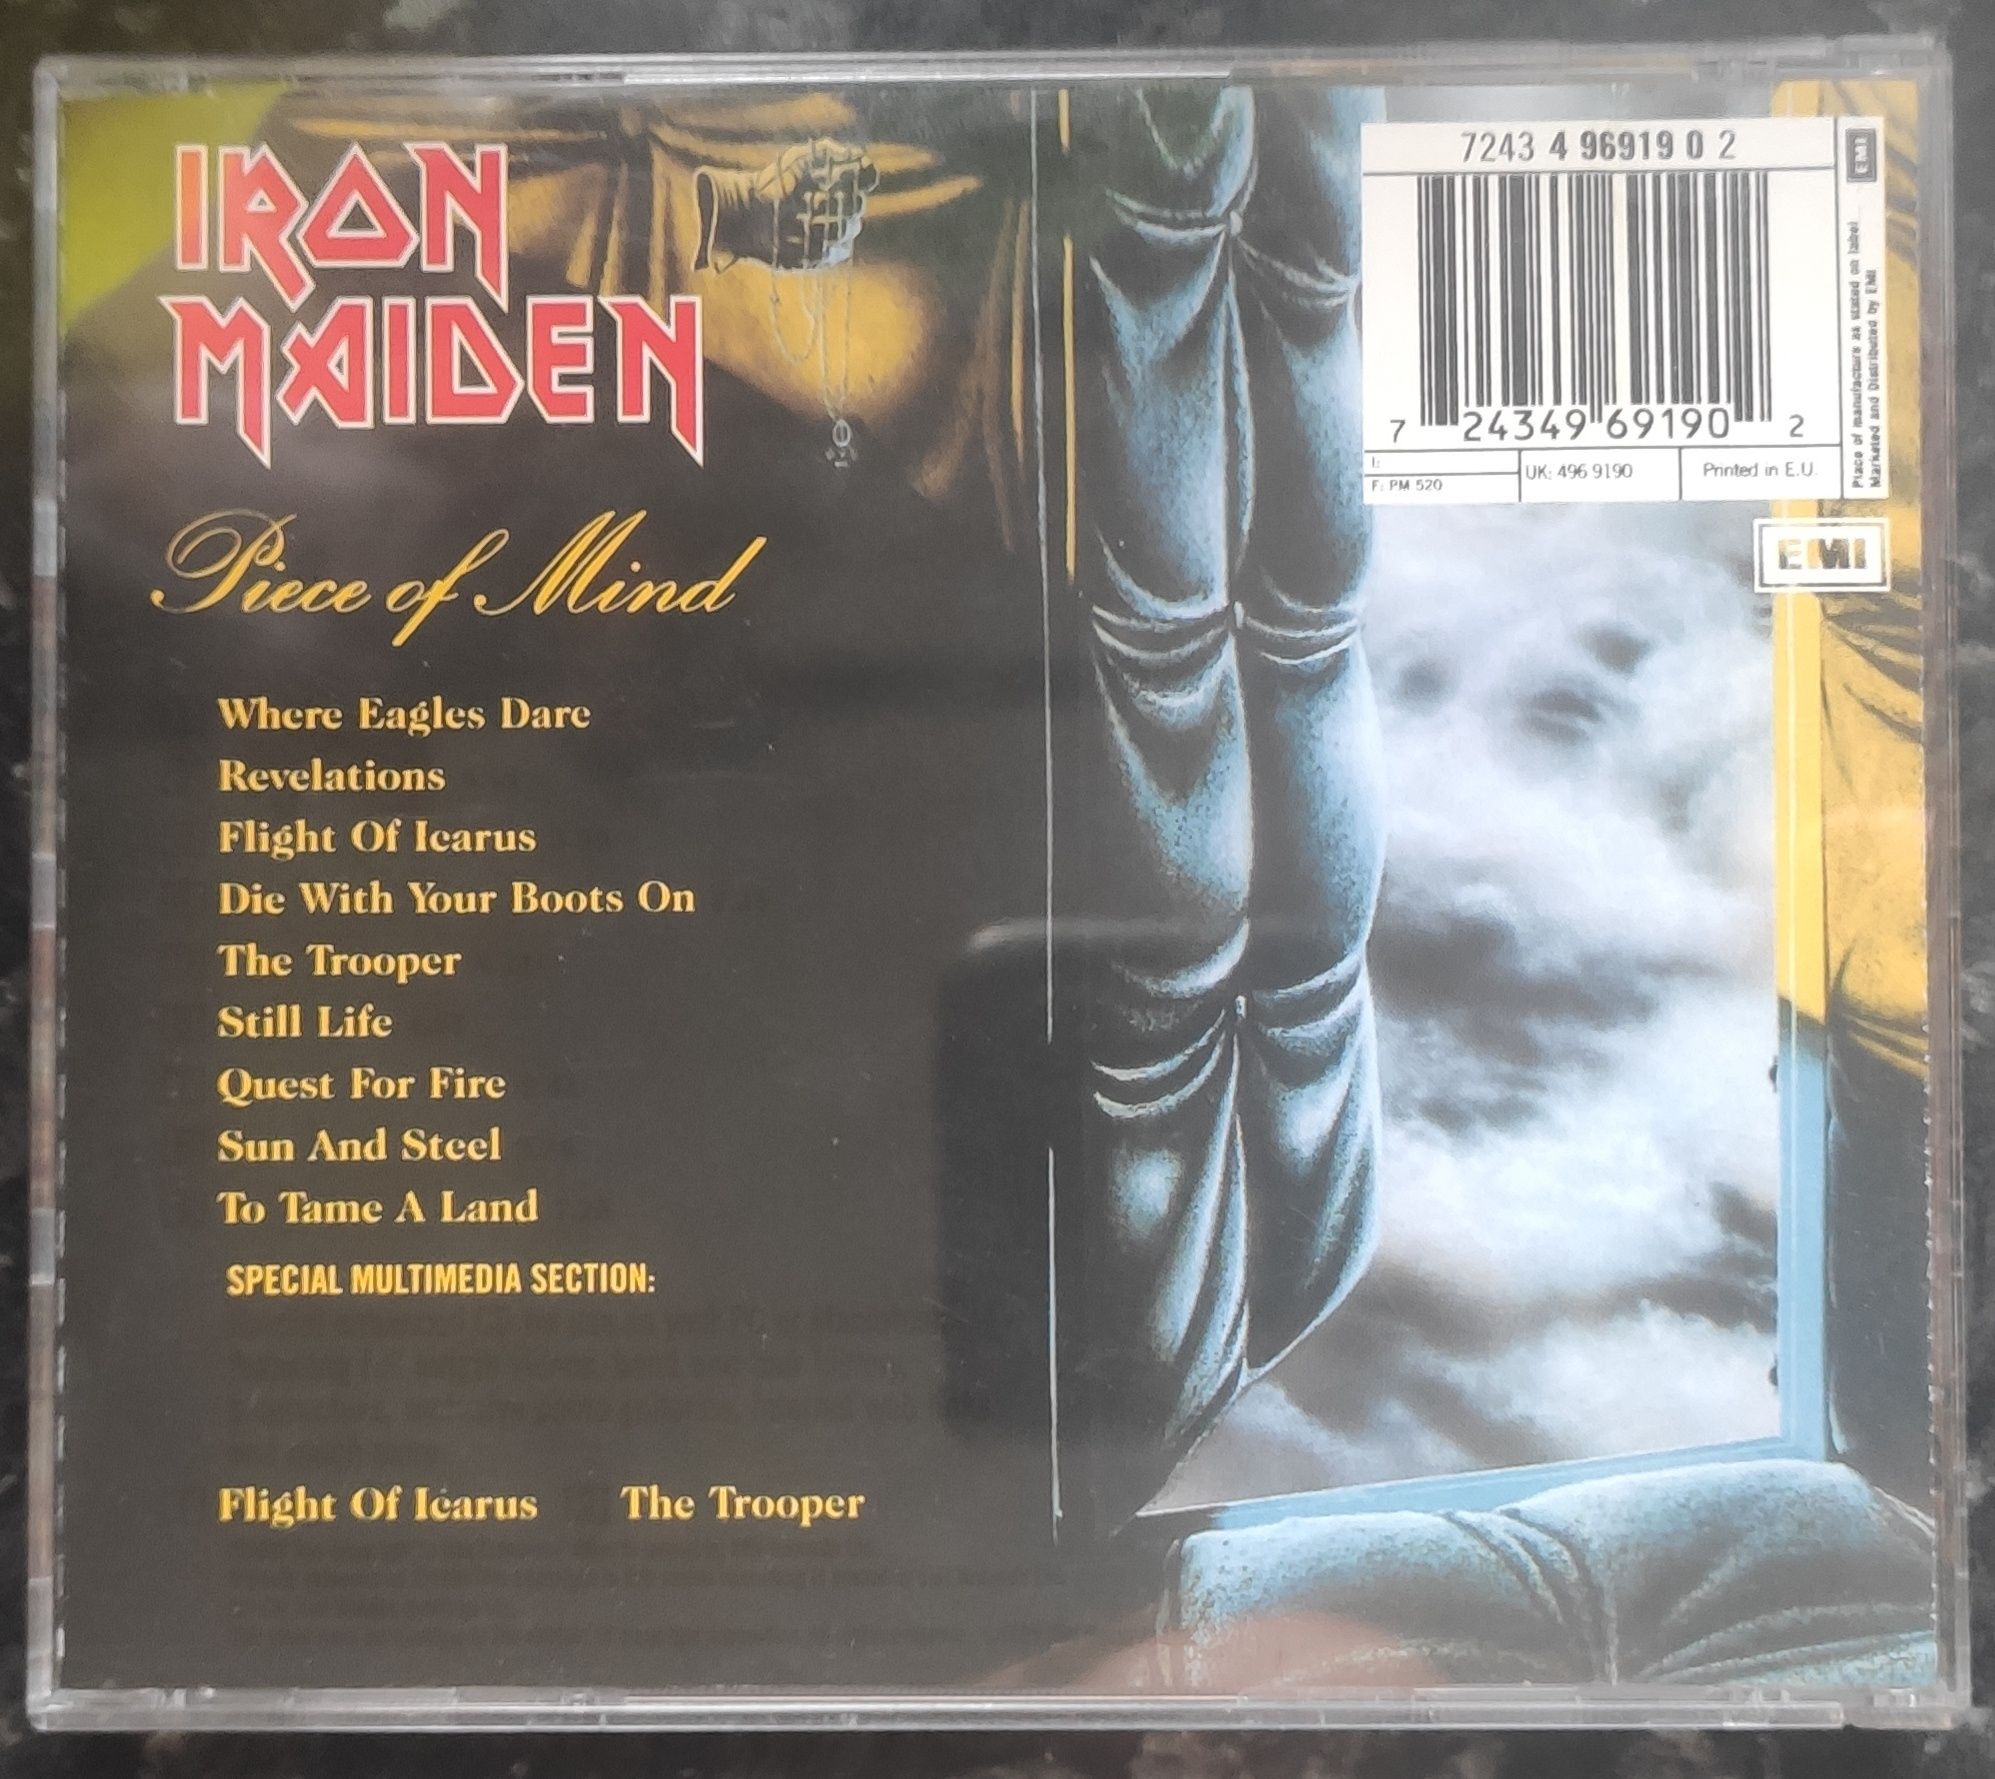 Iron Maiden "Piece of Mind"